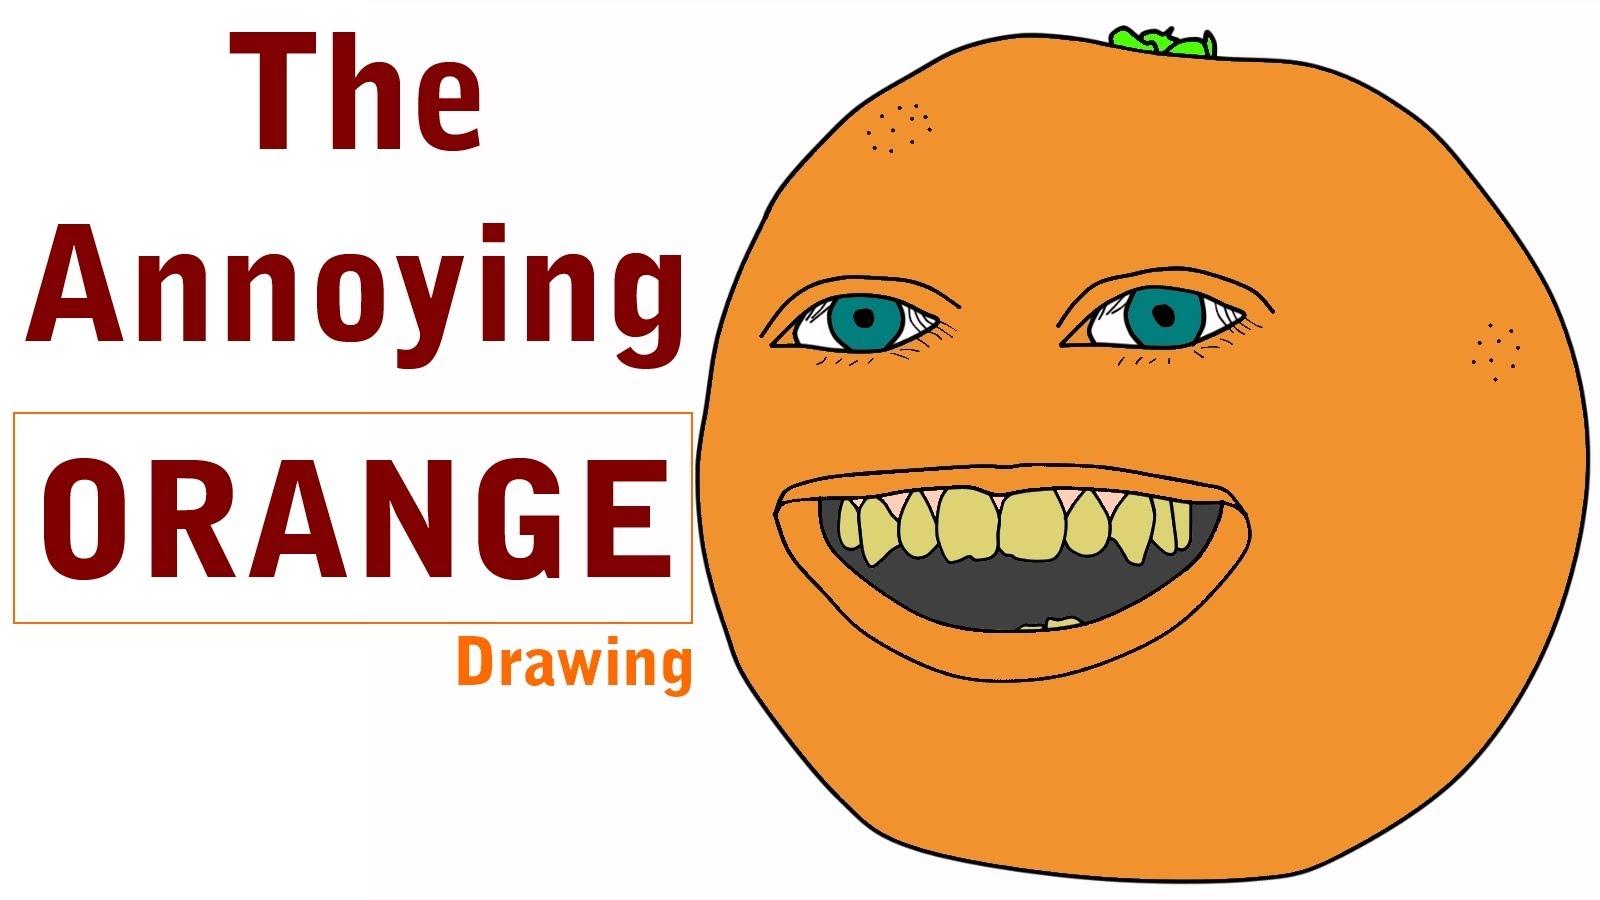 Annoying Orange Coloring Page.